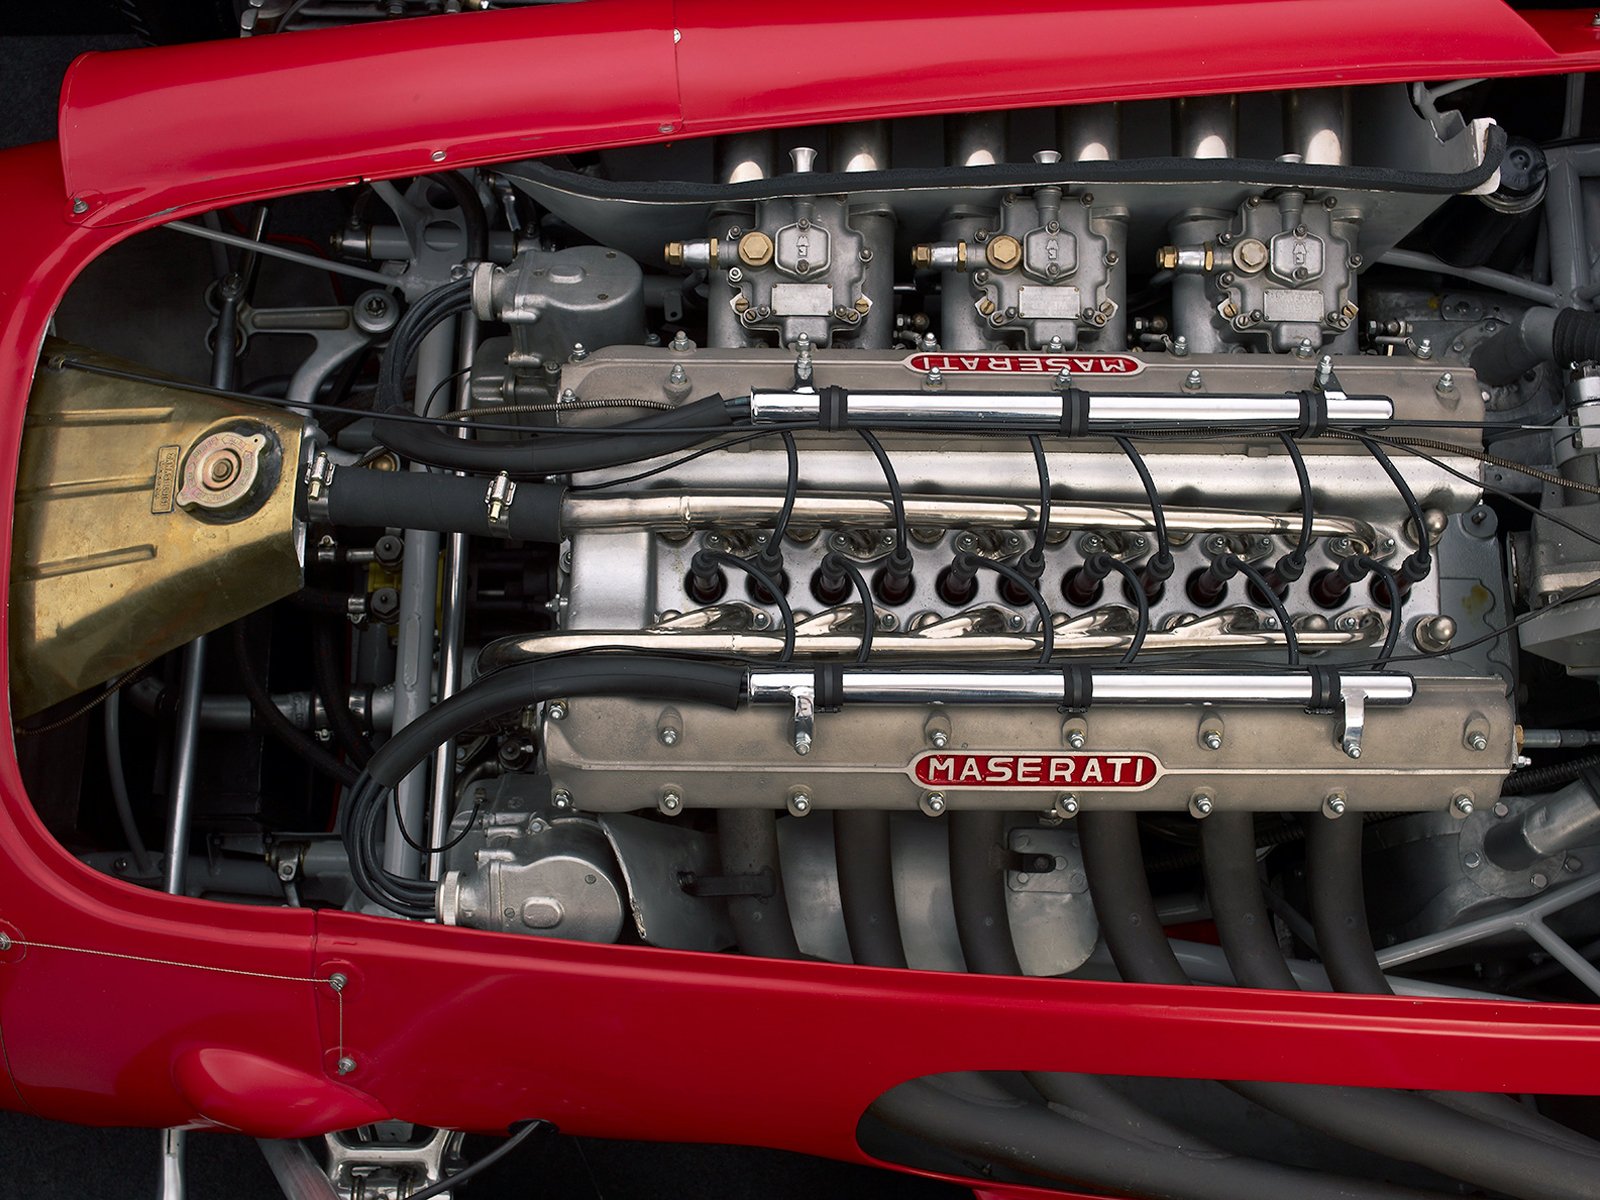 Двигатель мазерати. Maserati 250f. Maserati 250f 6 cylinder 1954. Мазерати f136 r мотор. Мазерати двигатель Феррари.